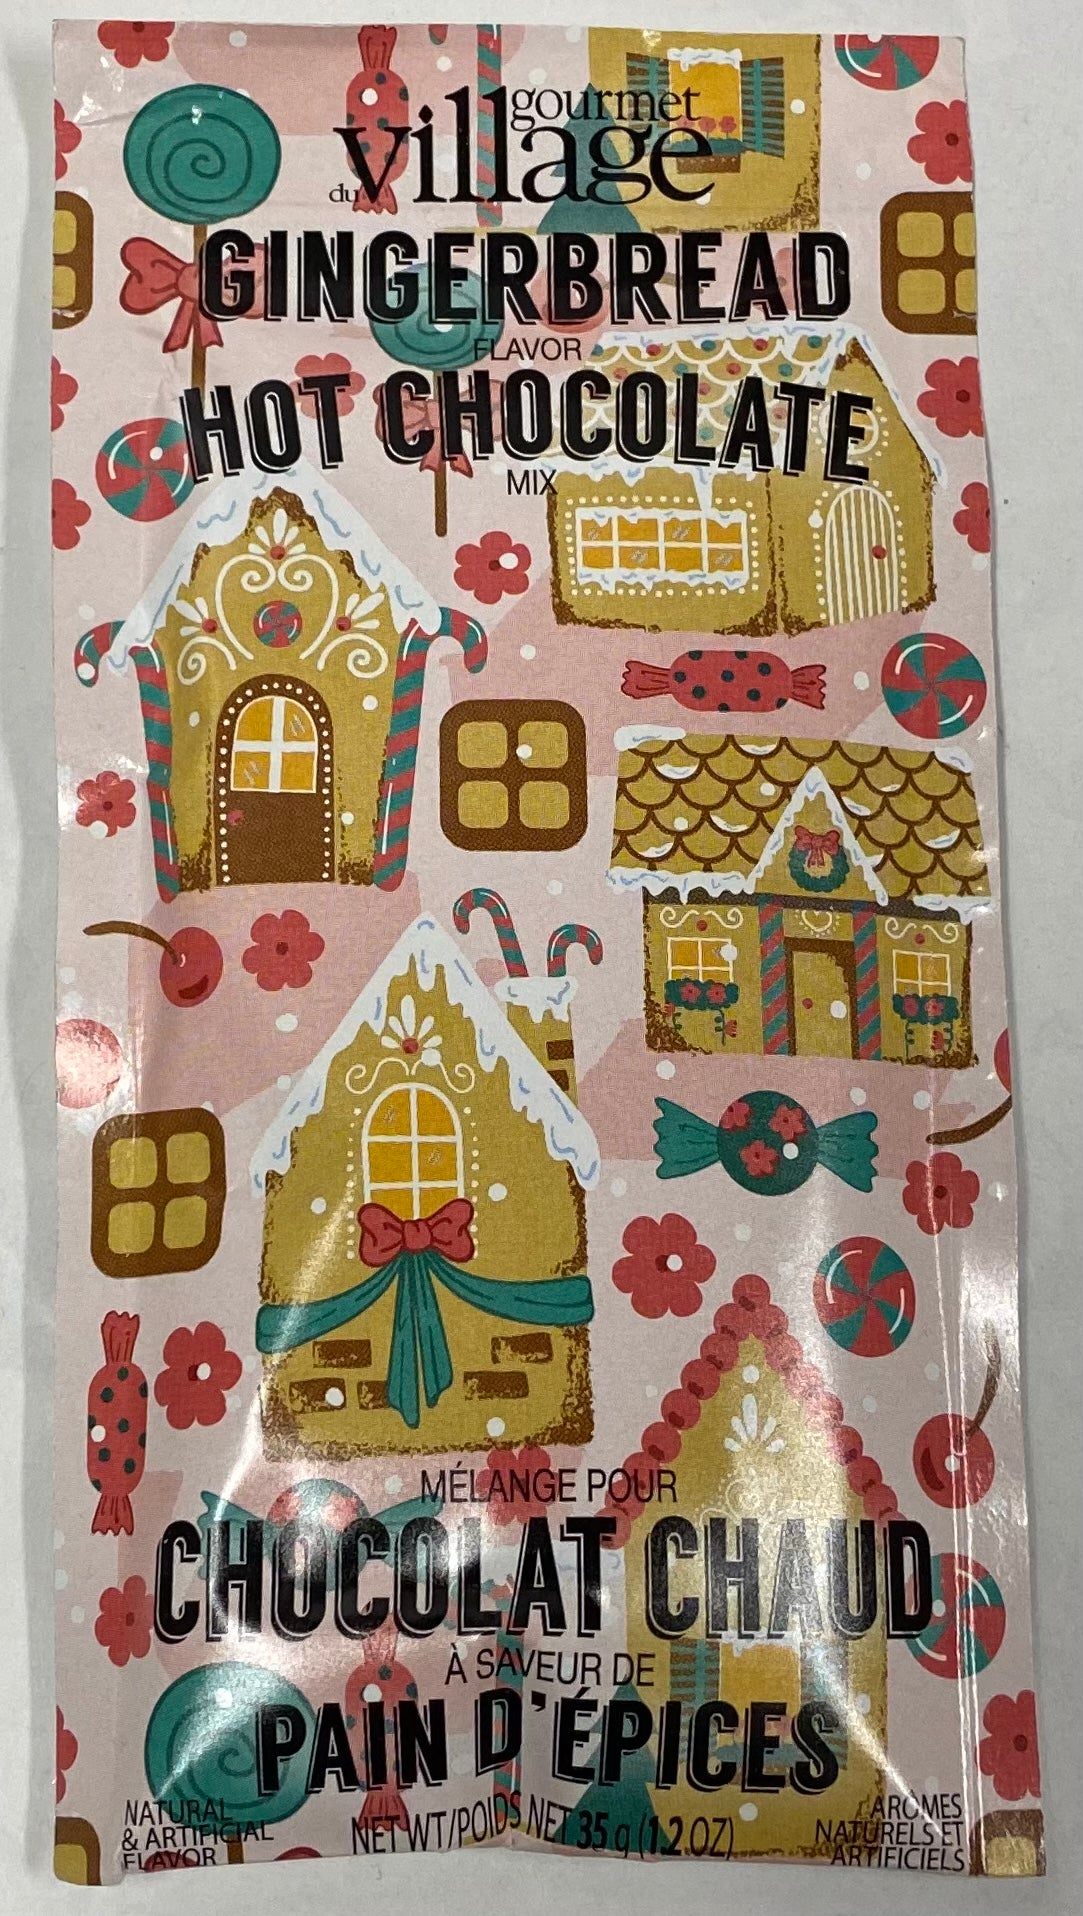 Gourmet Village "Gingerbread" Hot Chocolate Mix